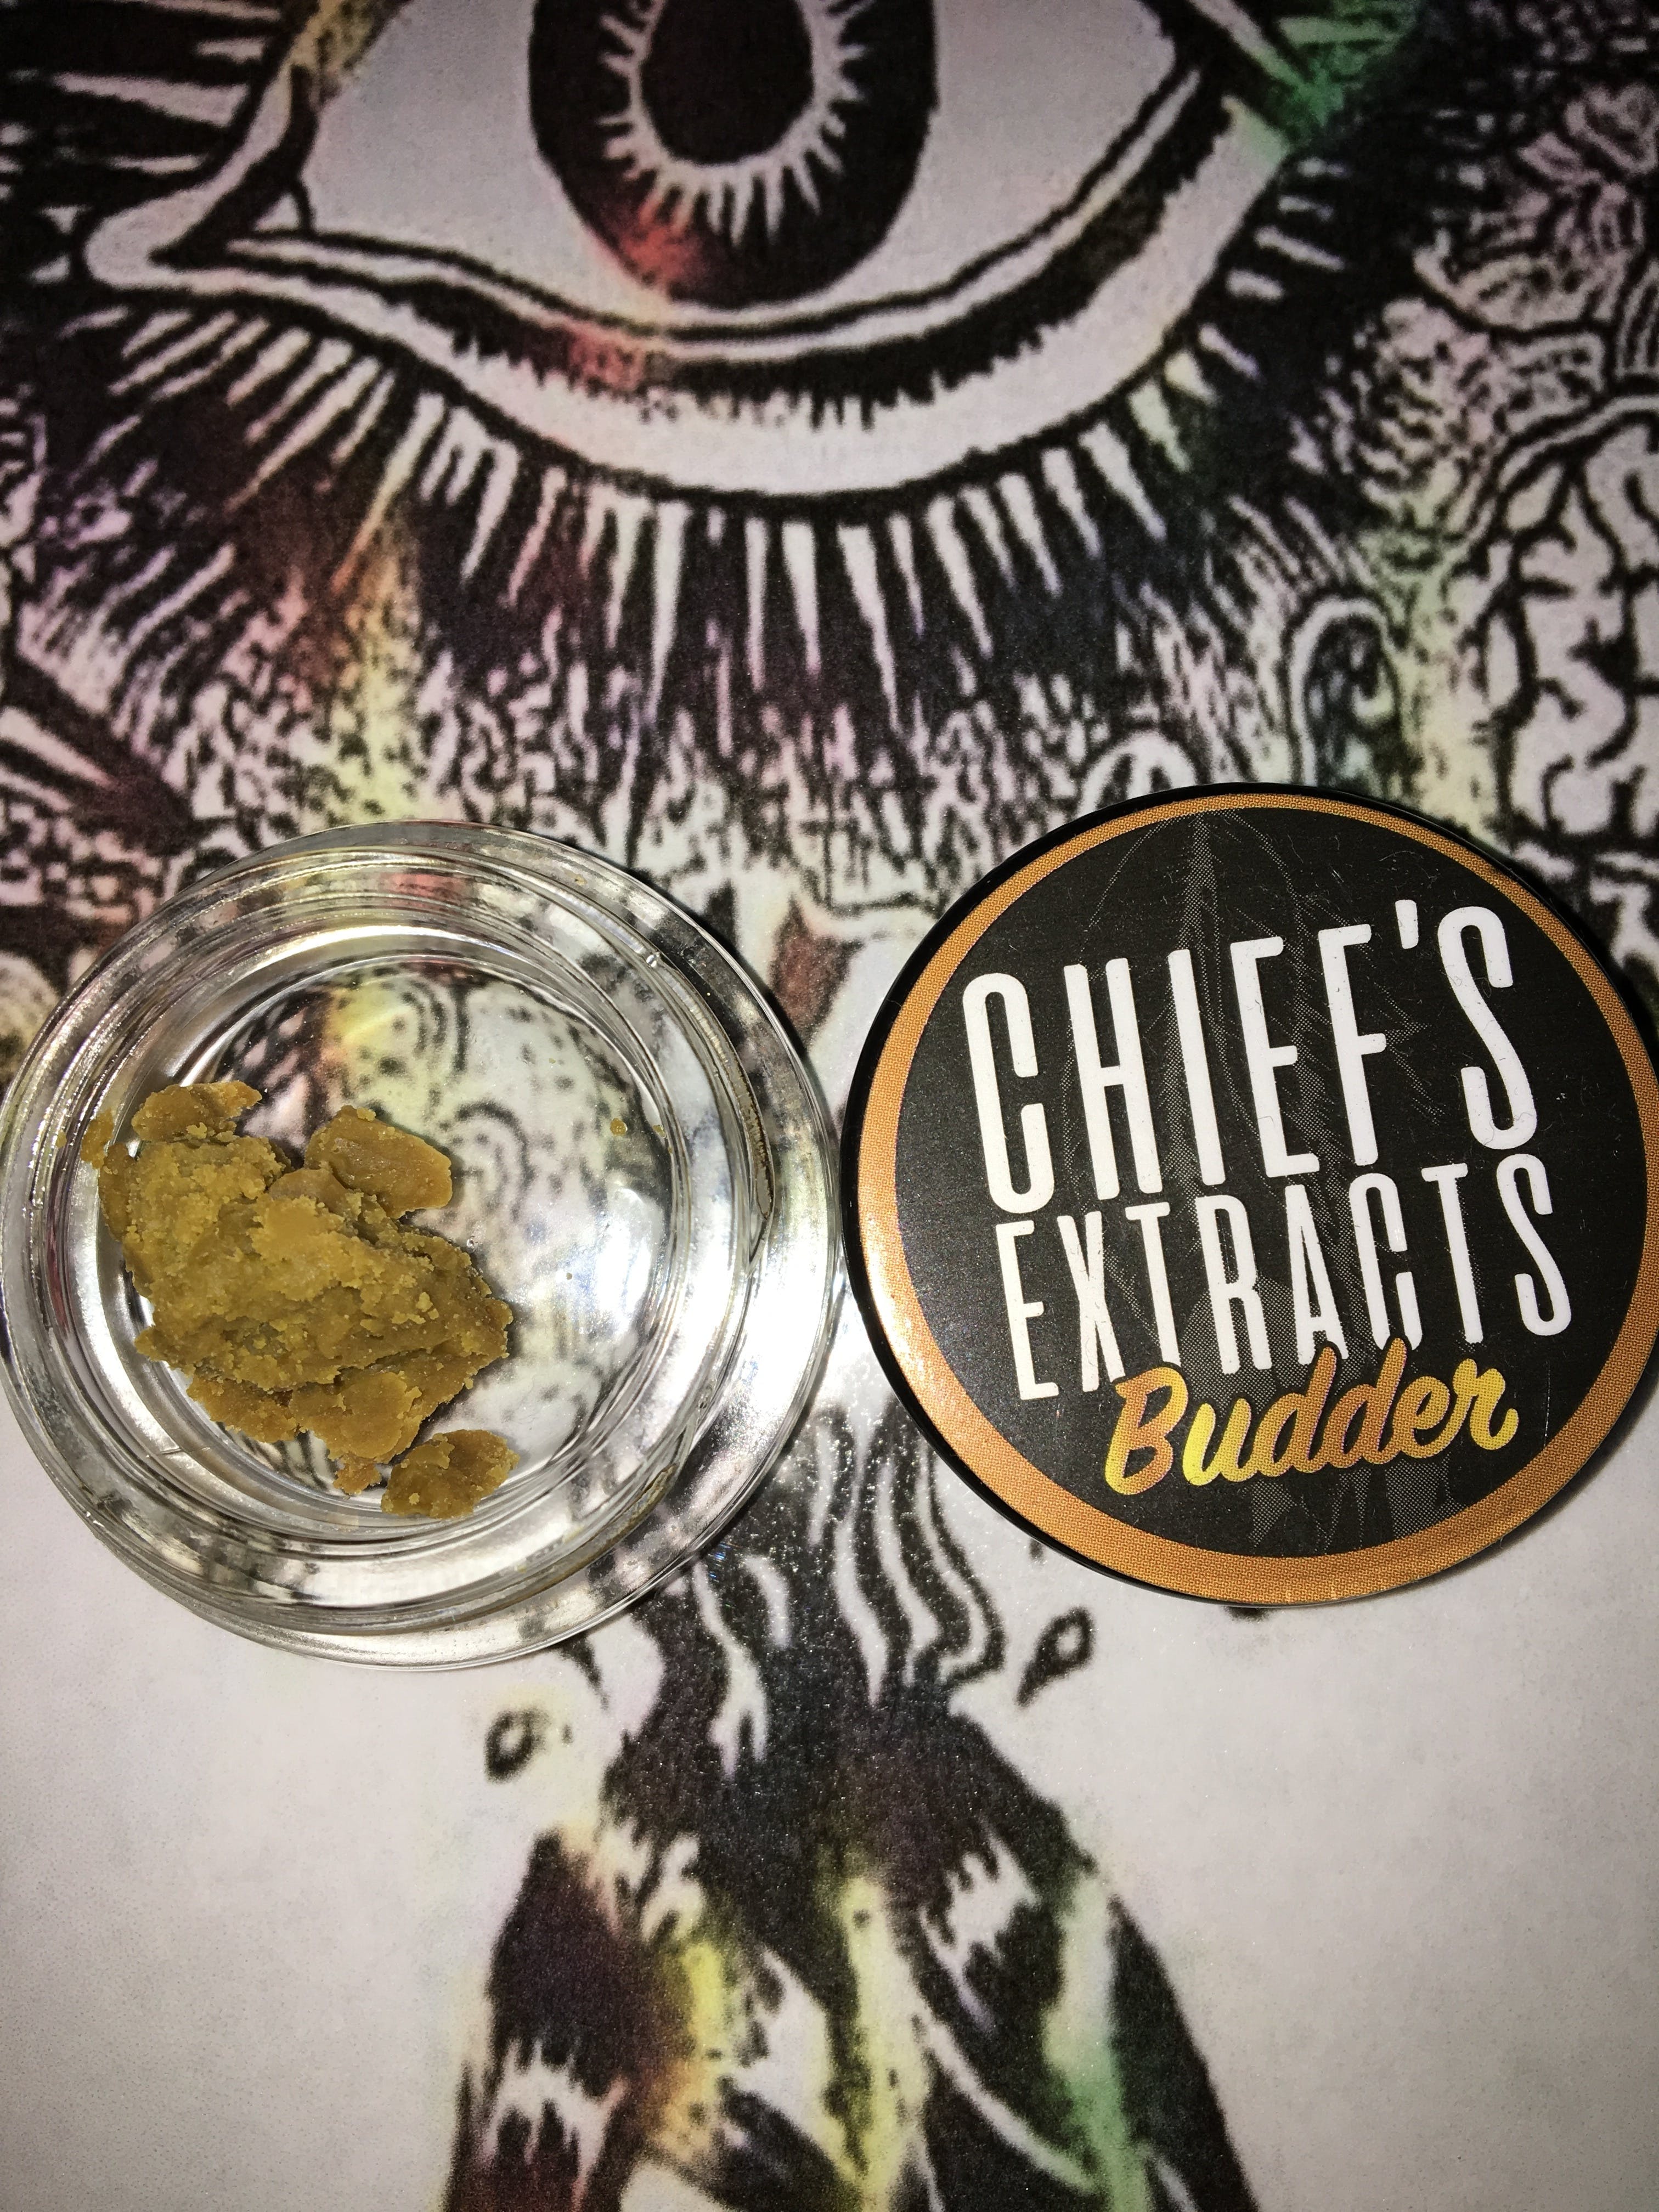 marijuana-dispensaries-og-top-shop-in-los-angeles-chiefs-extracts-budder